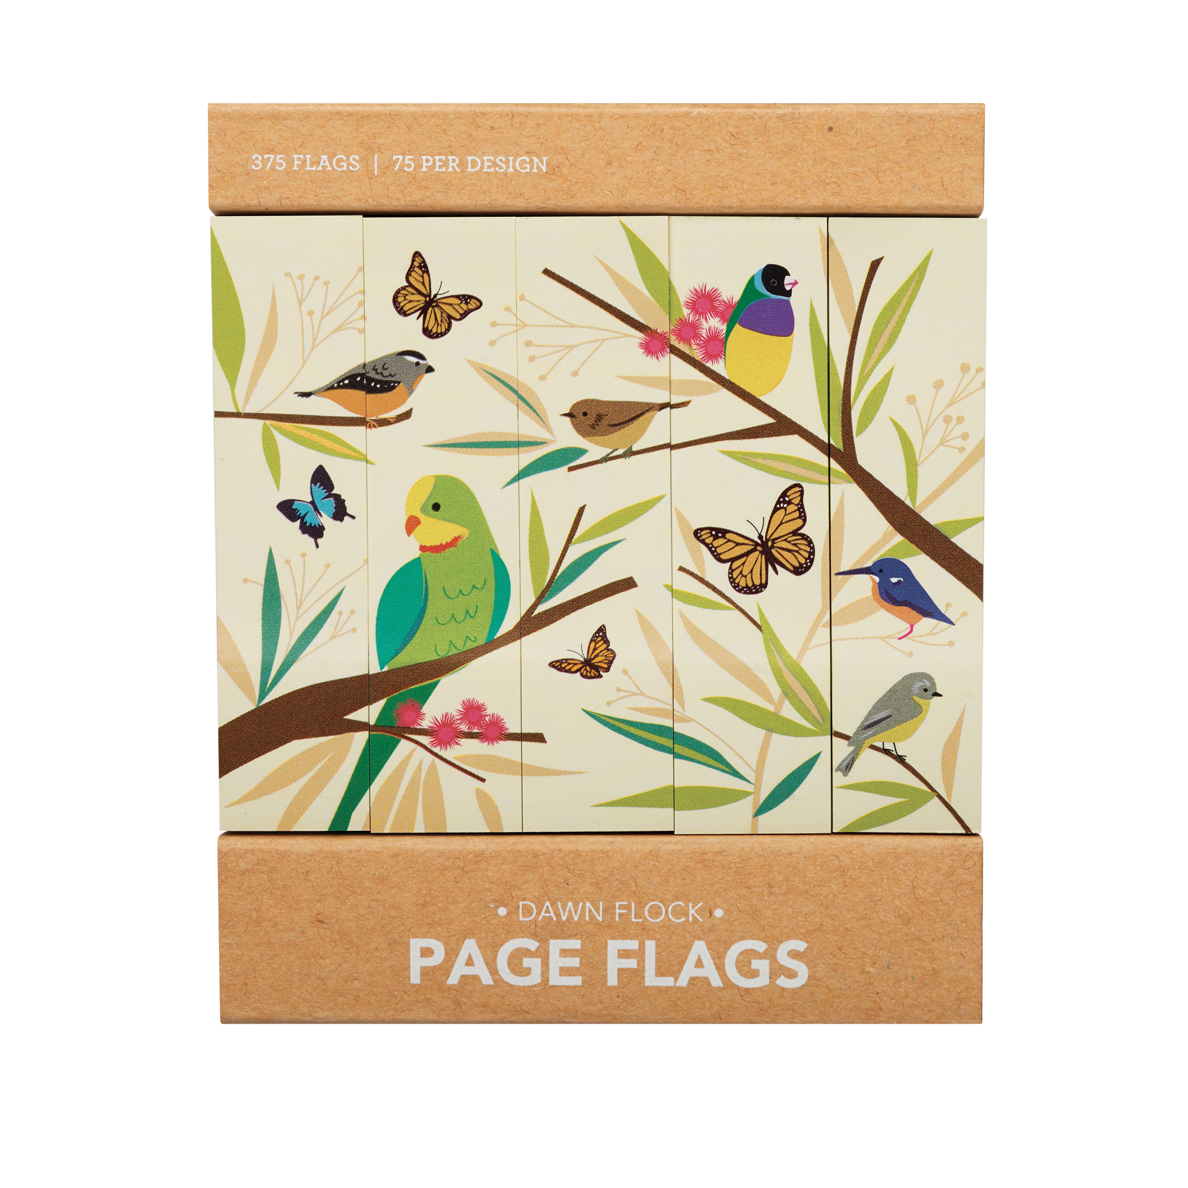 PAGE FLAGS - Dawn flok